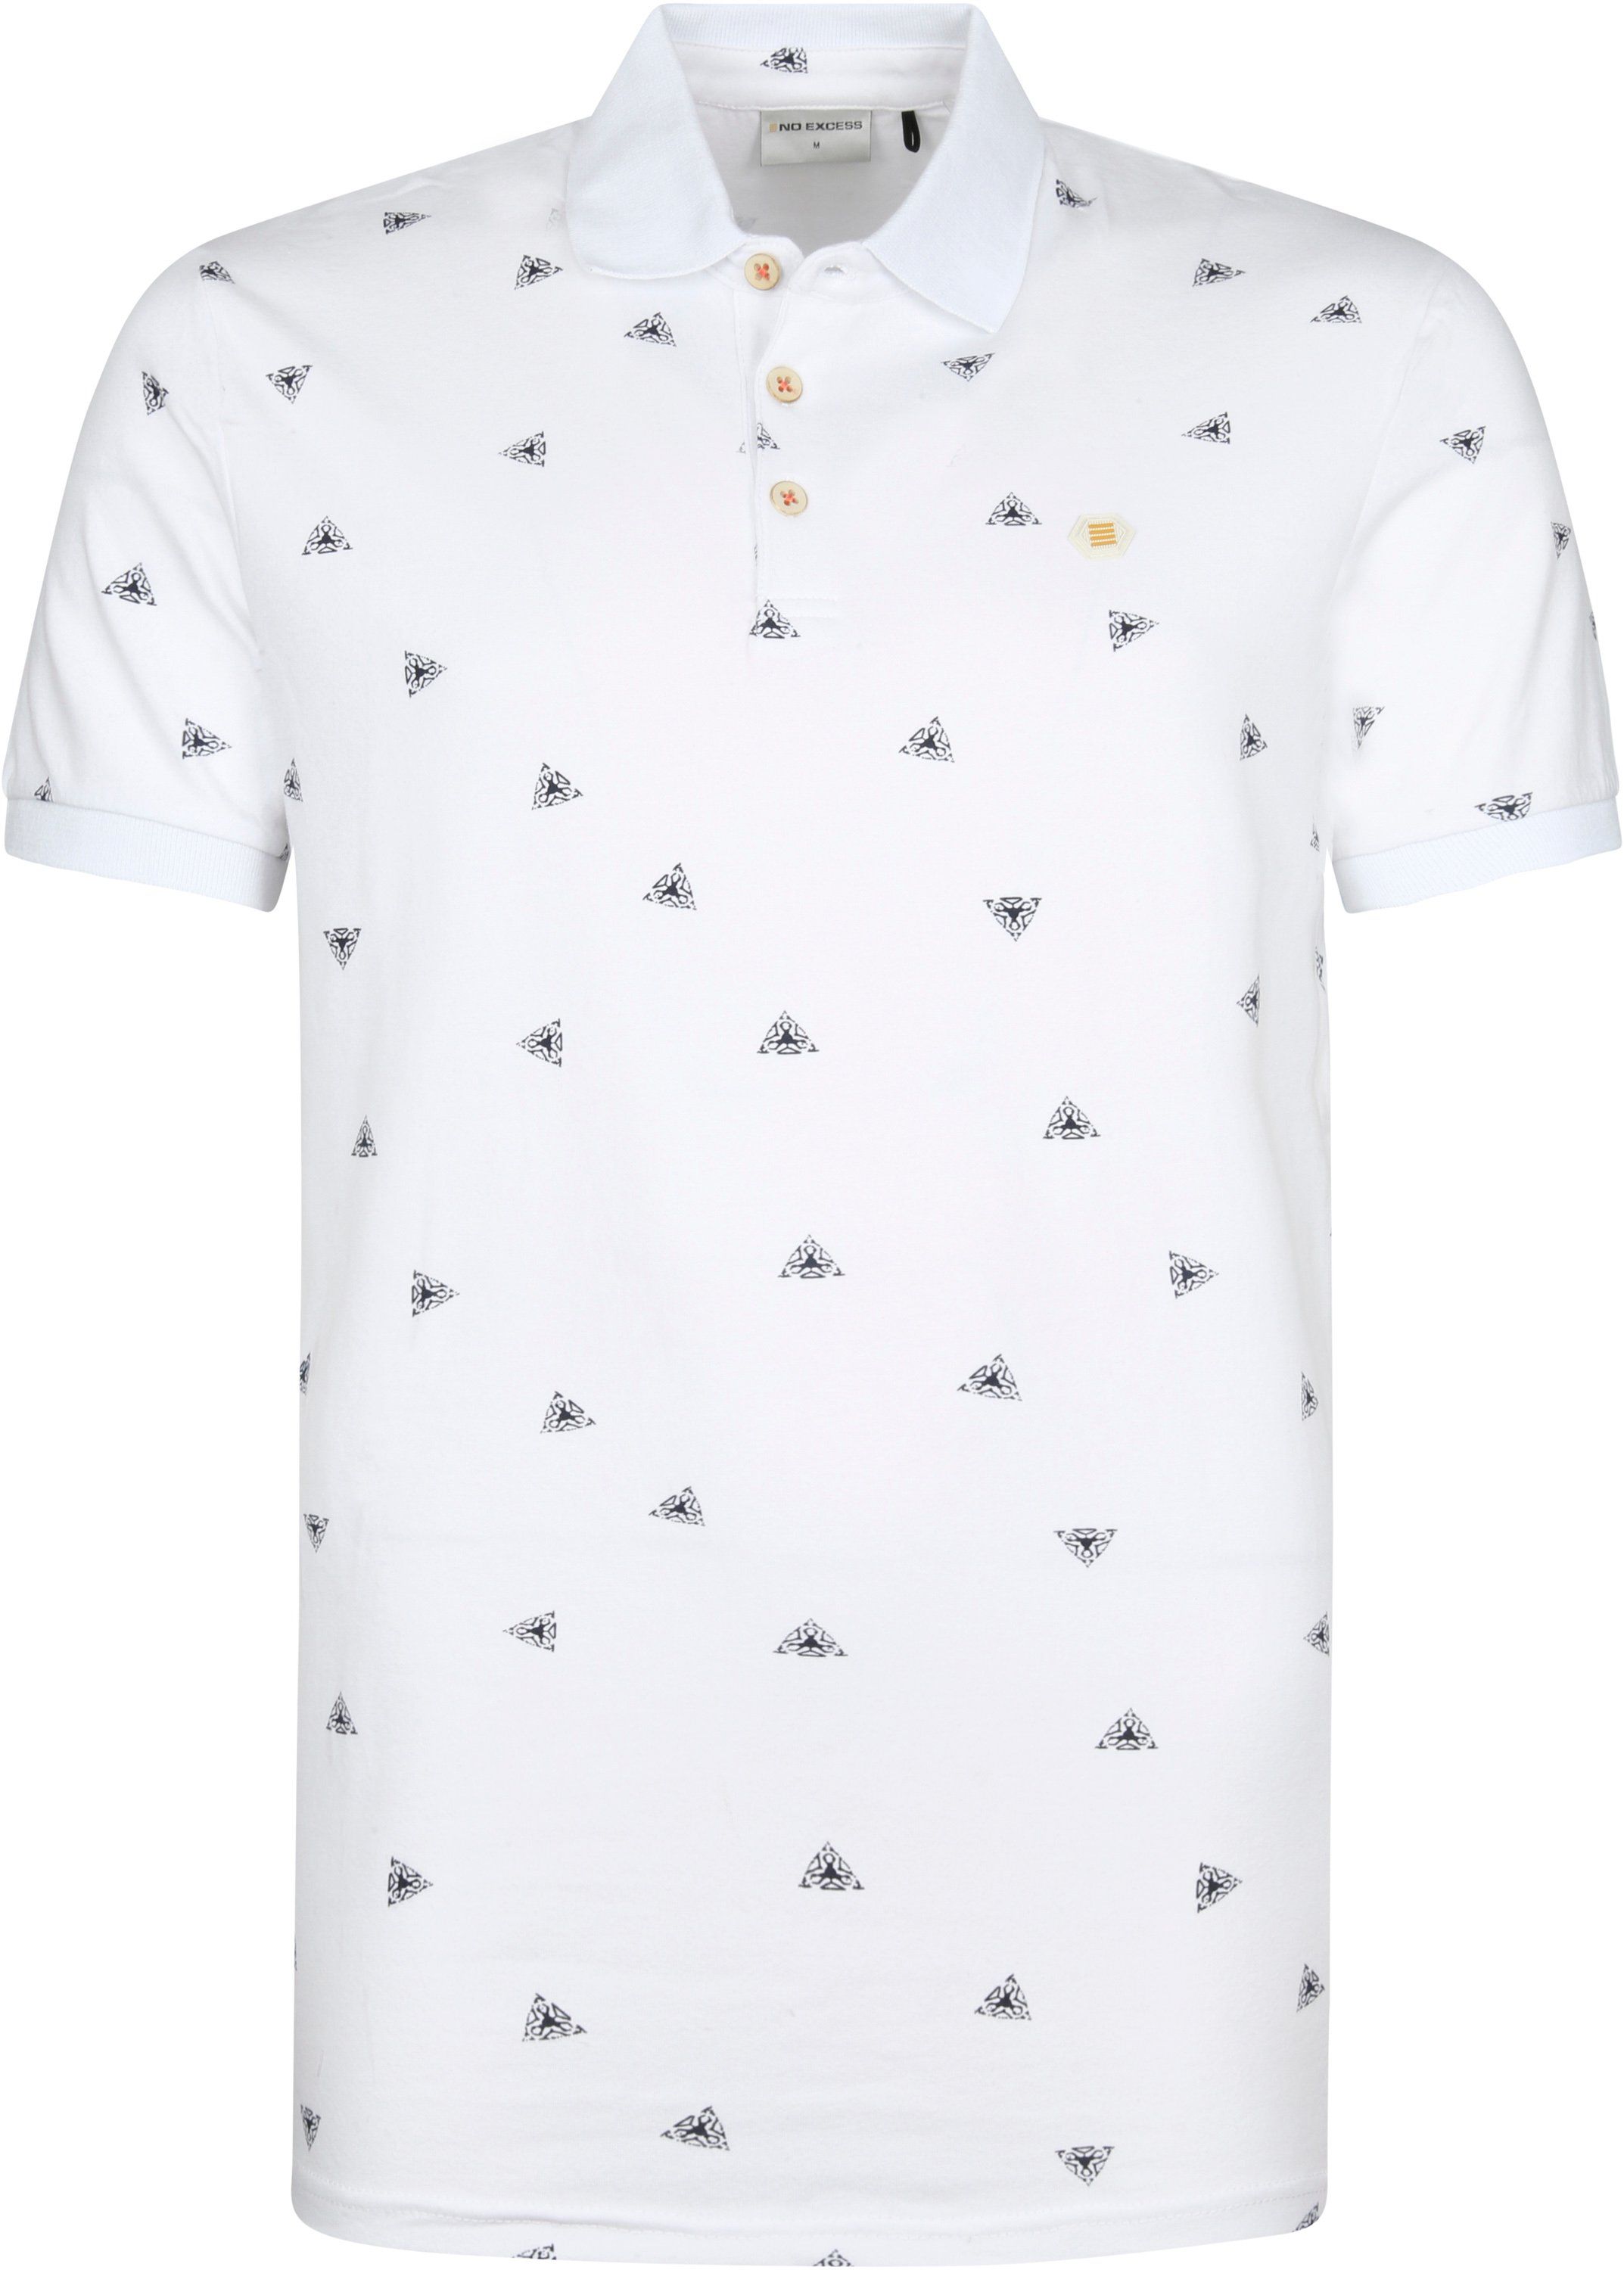 No-Excess Polo Shirt Printed White size 3XL